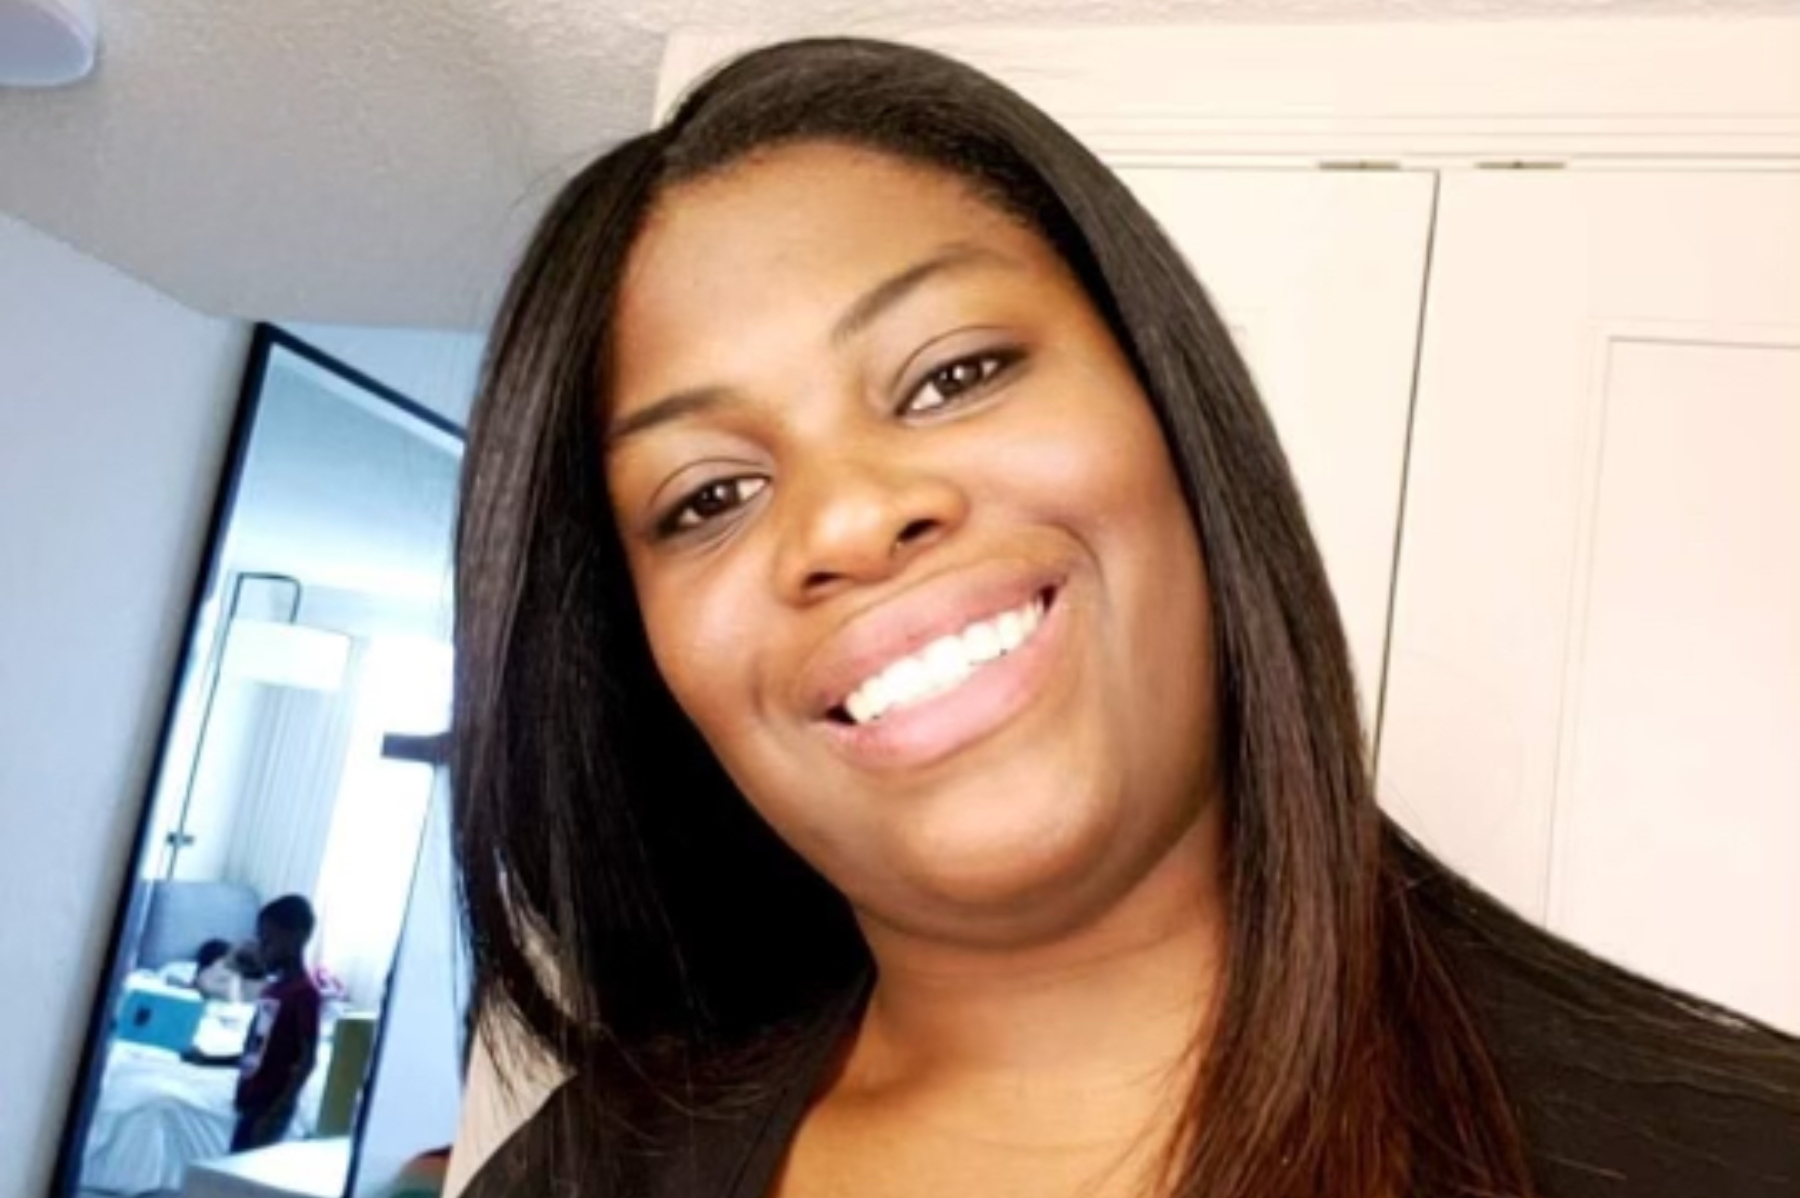 Ajike "AJ" Owens, a 35-year-old Black woman who was killed by a White neighbor